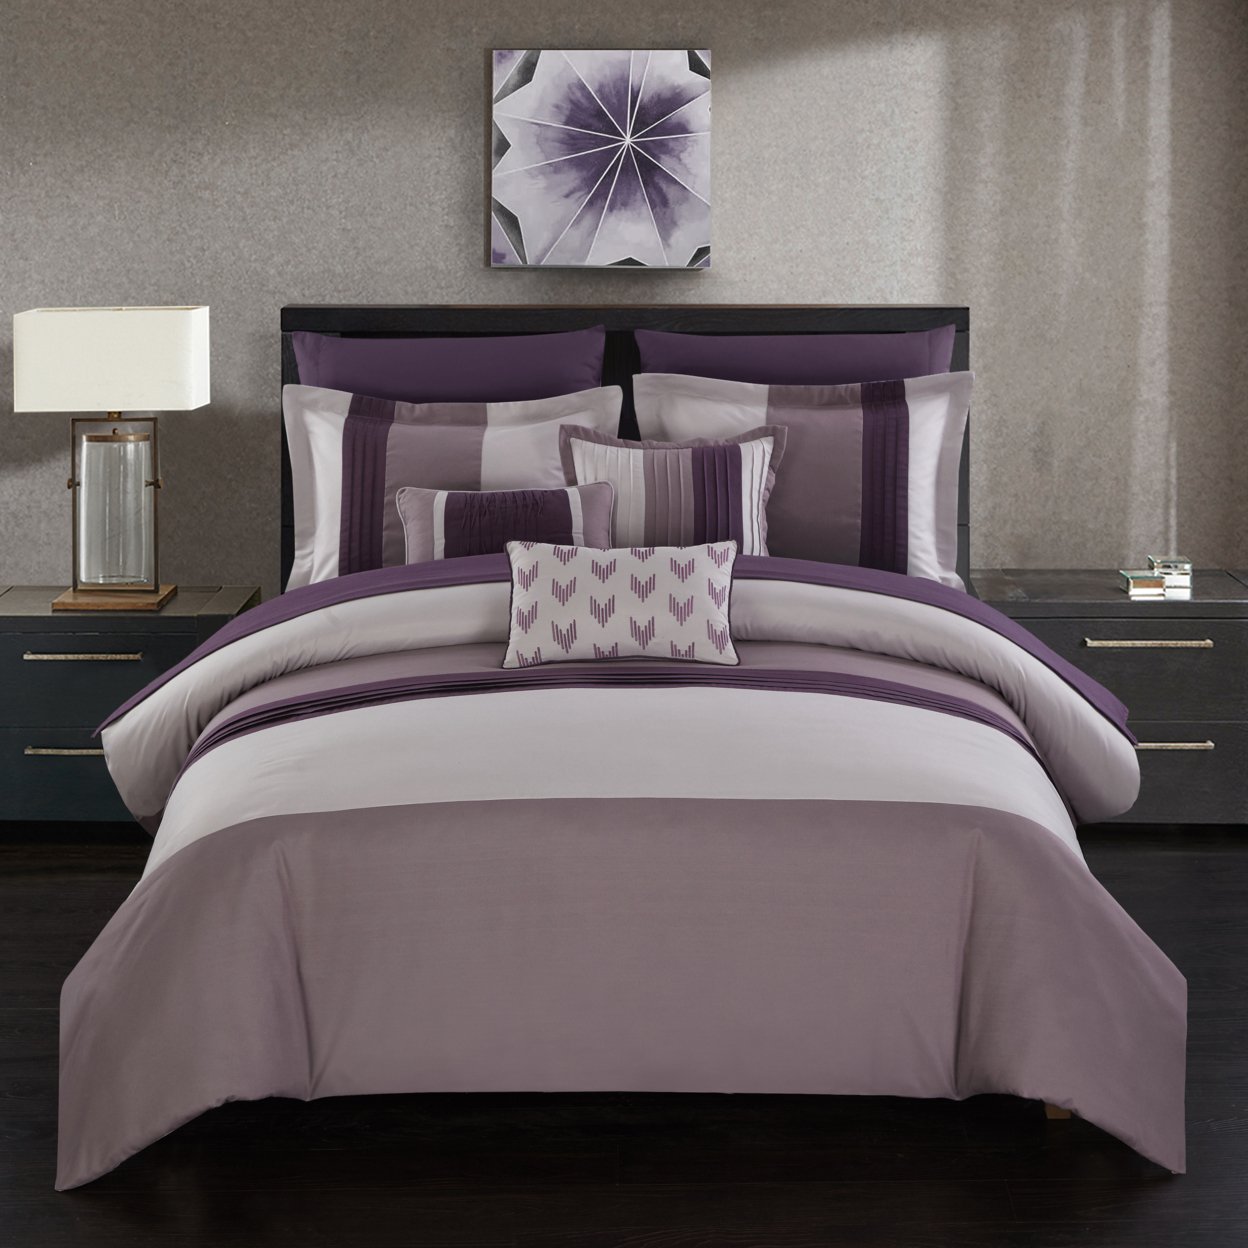 Rashi 10 or 8 Piece Color Block Bed In a Bag Bedding and Comforter Set - plum, queen - queen purple